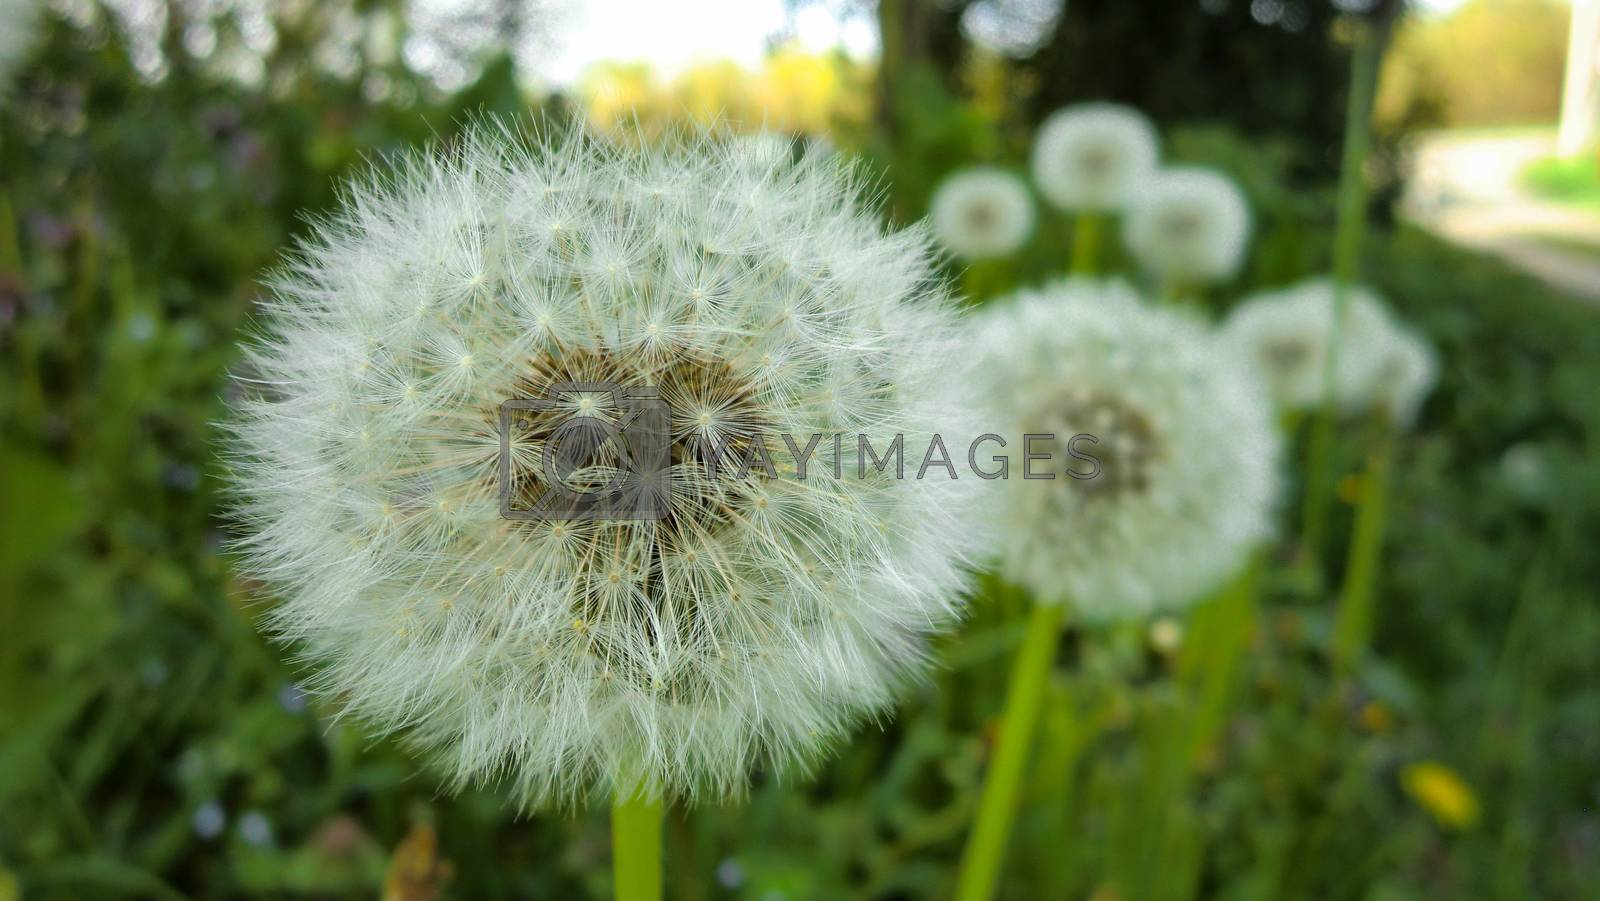 Royalty free image of Taraxacum flower by pippocarlot